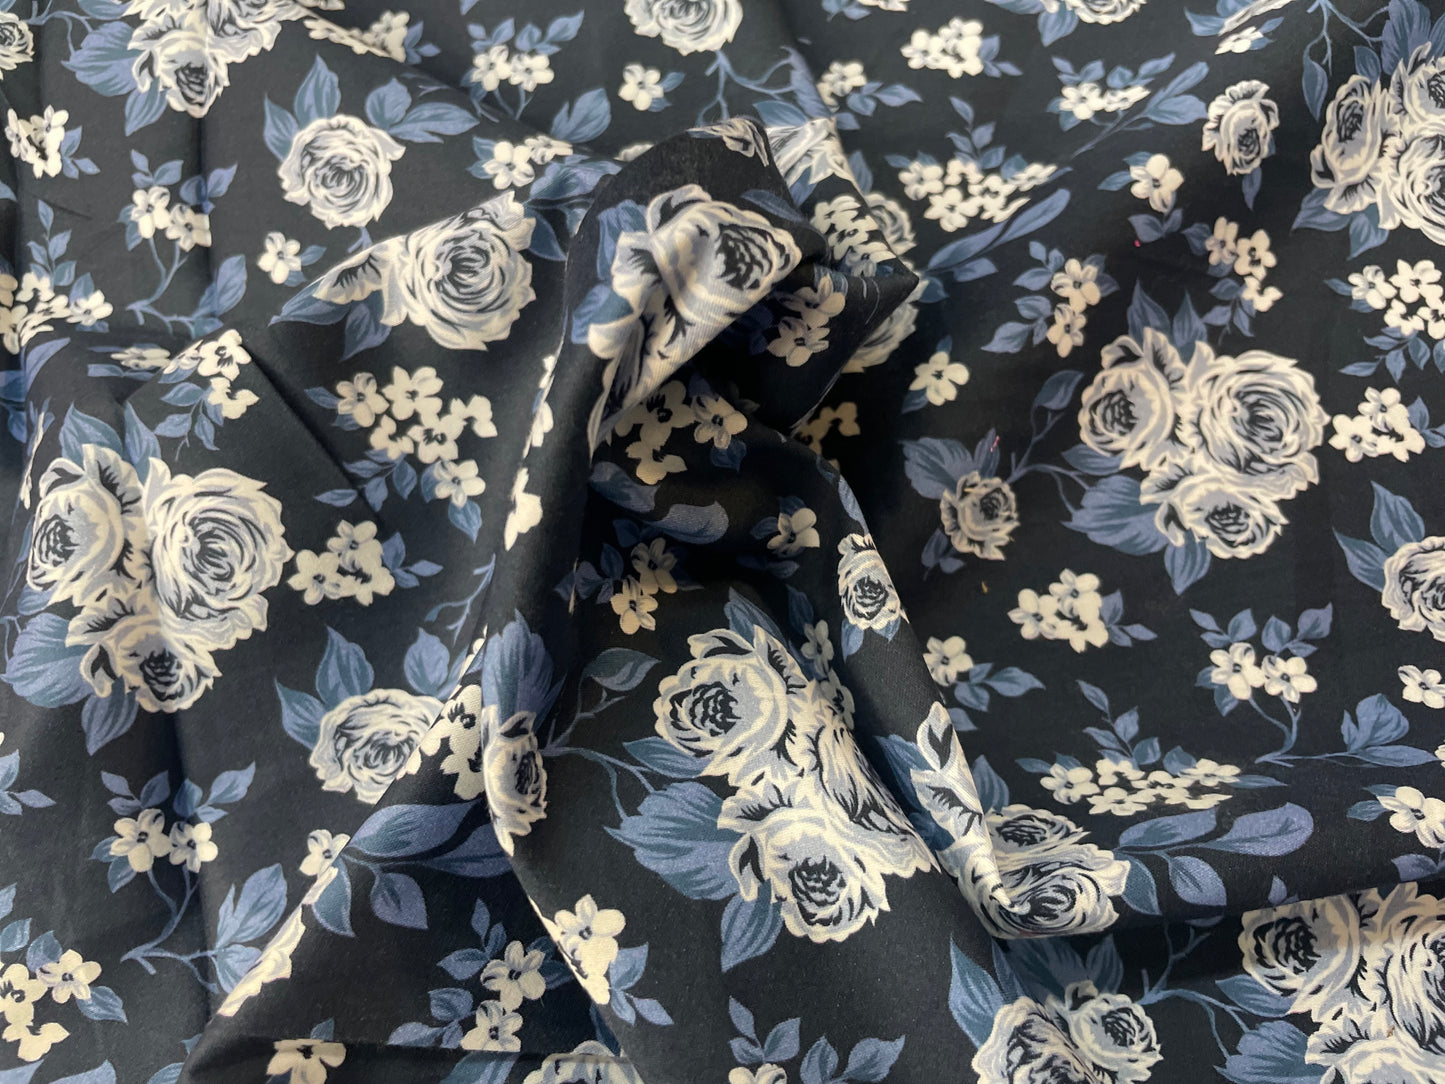 Floral Print Cotton Calico Satin Finish - Blue, Black & White